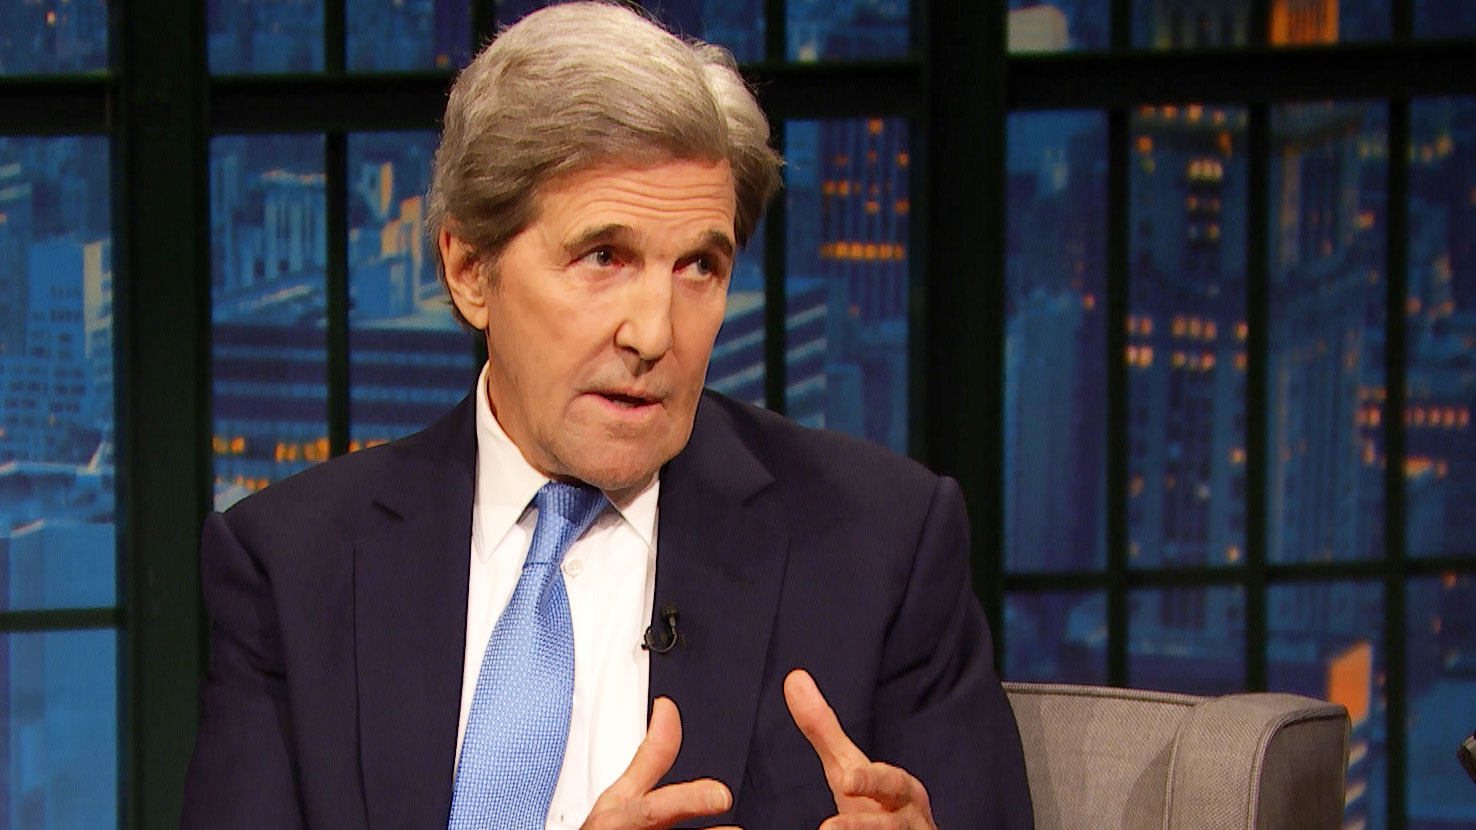 Watch Late Night with Seth Meyers Interview: John Kerry Defends Nancy Pelosi - NBC.com1476 x 830